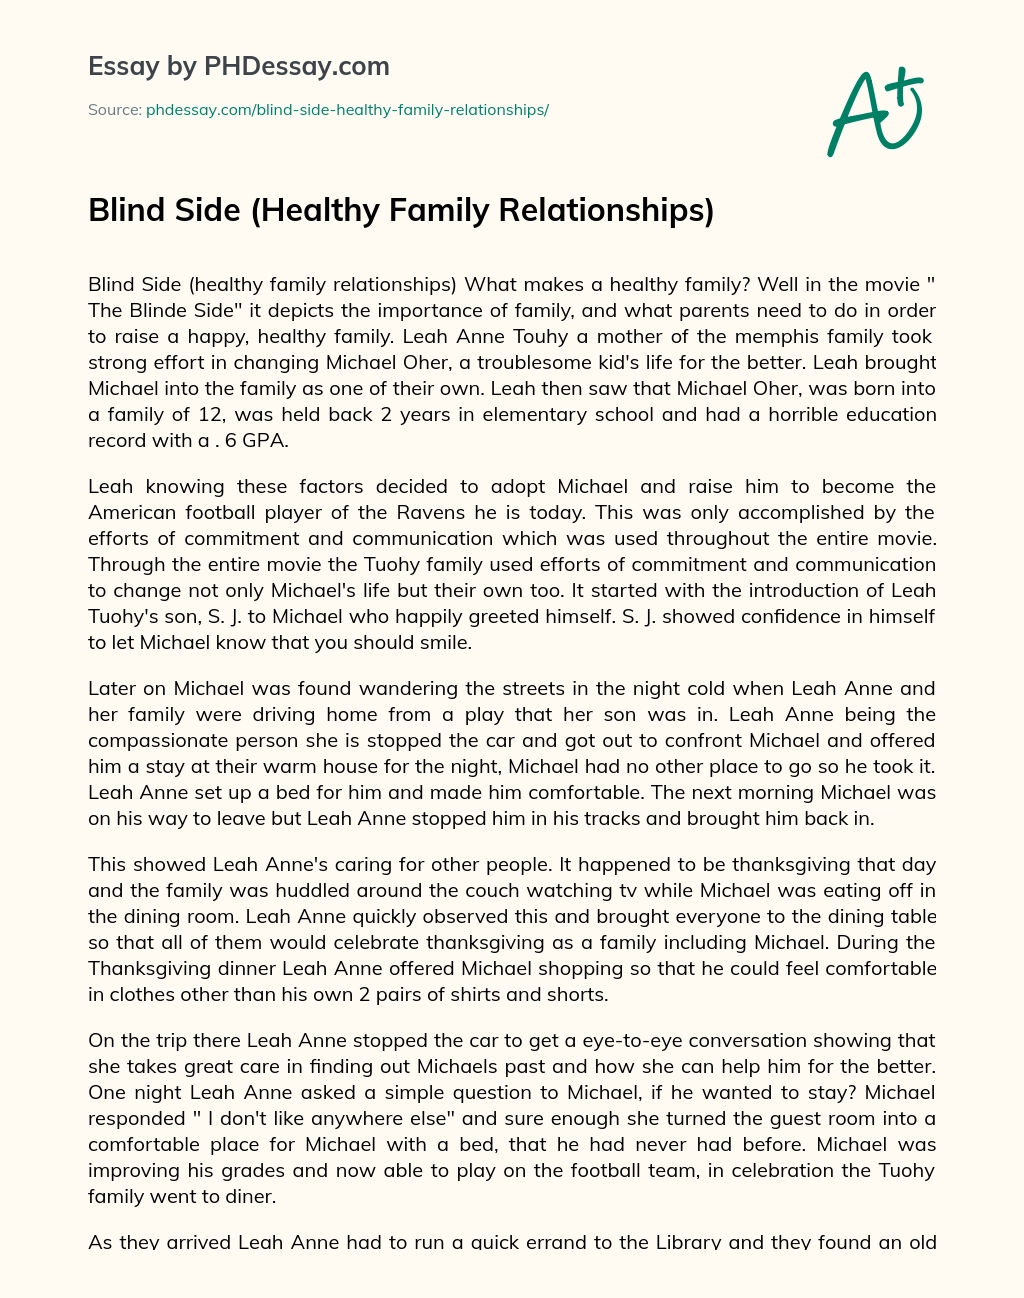 Blind Side (Healthy Family Relationships) essay